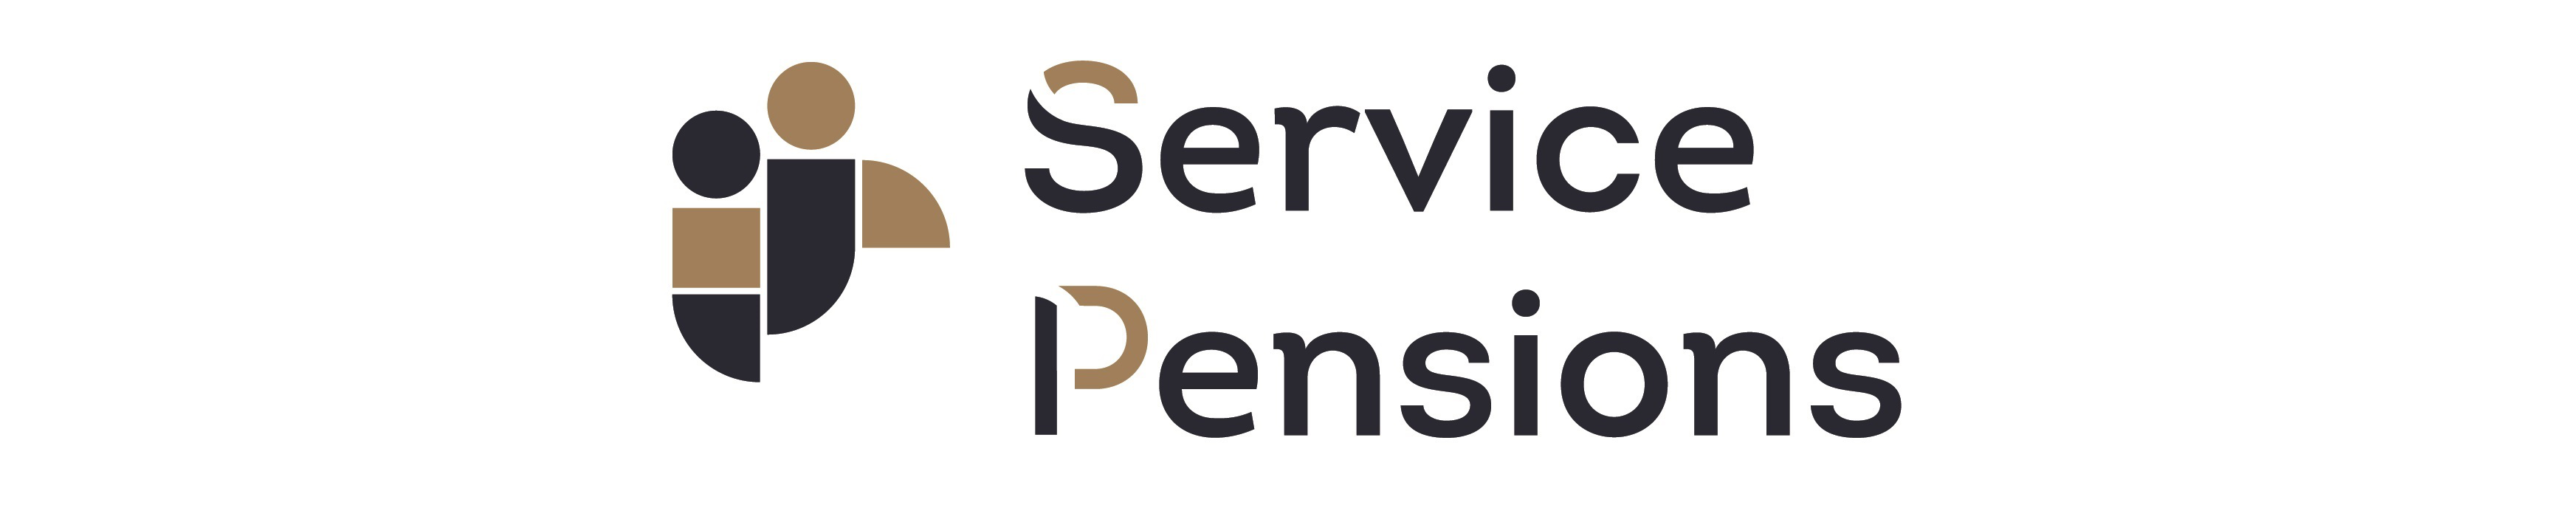 civil service widows and orphans pension scheme